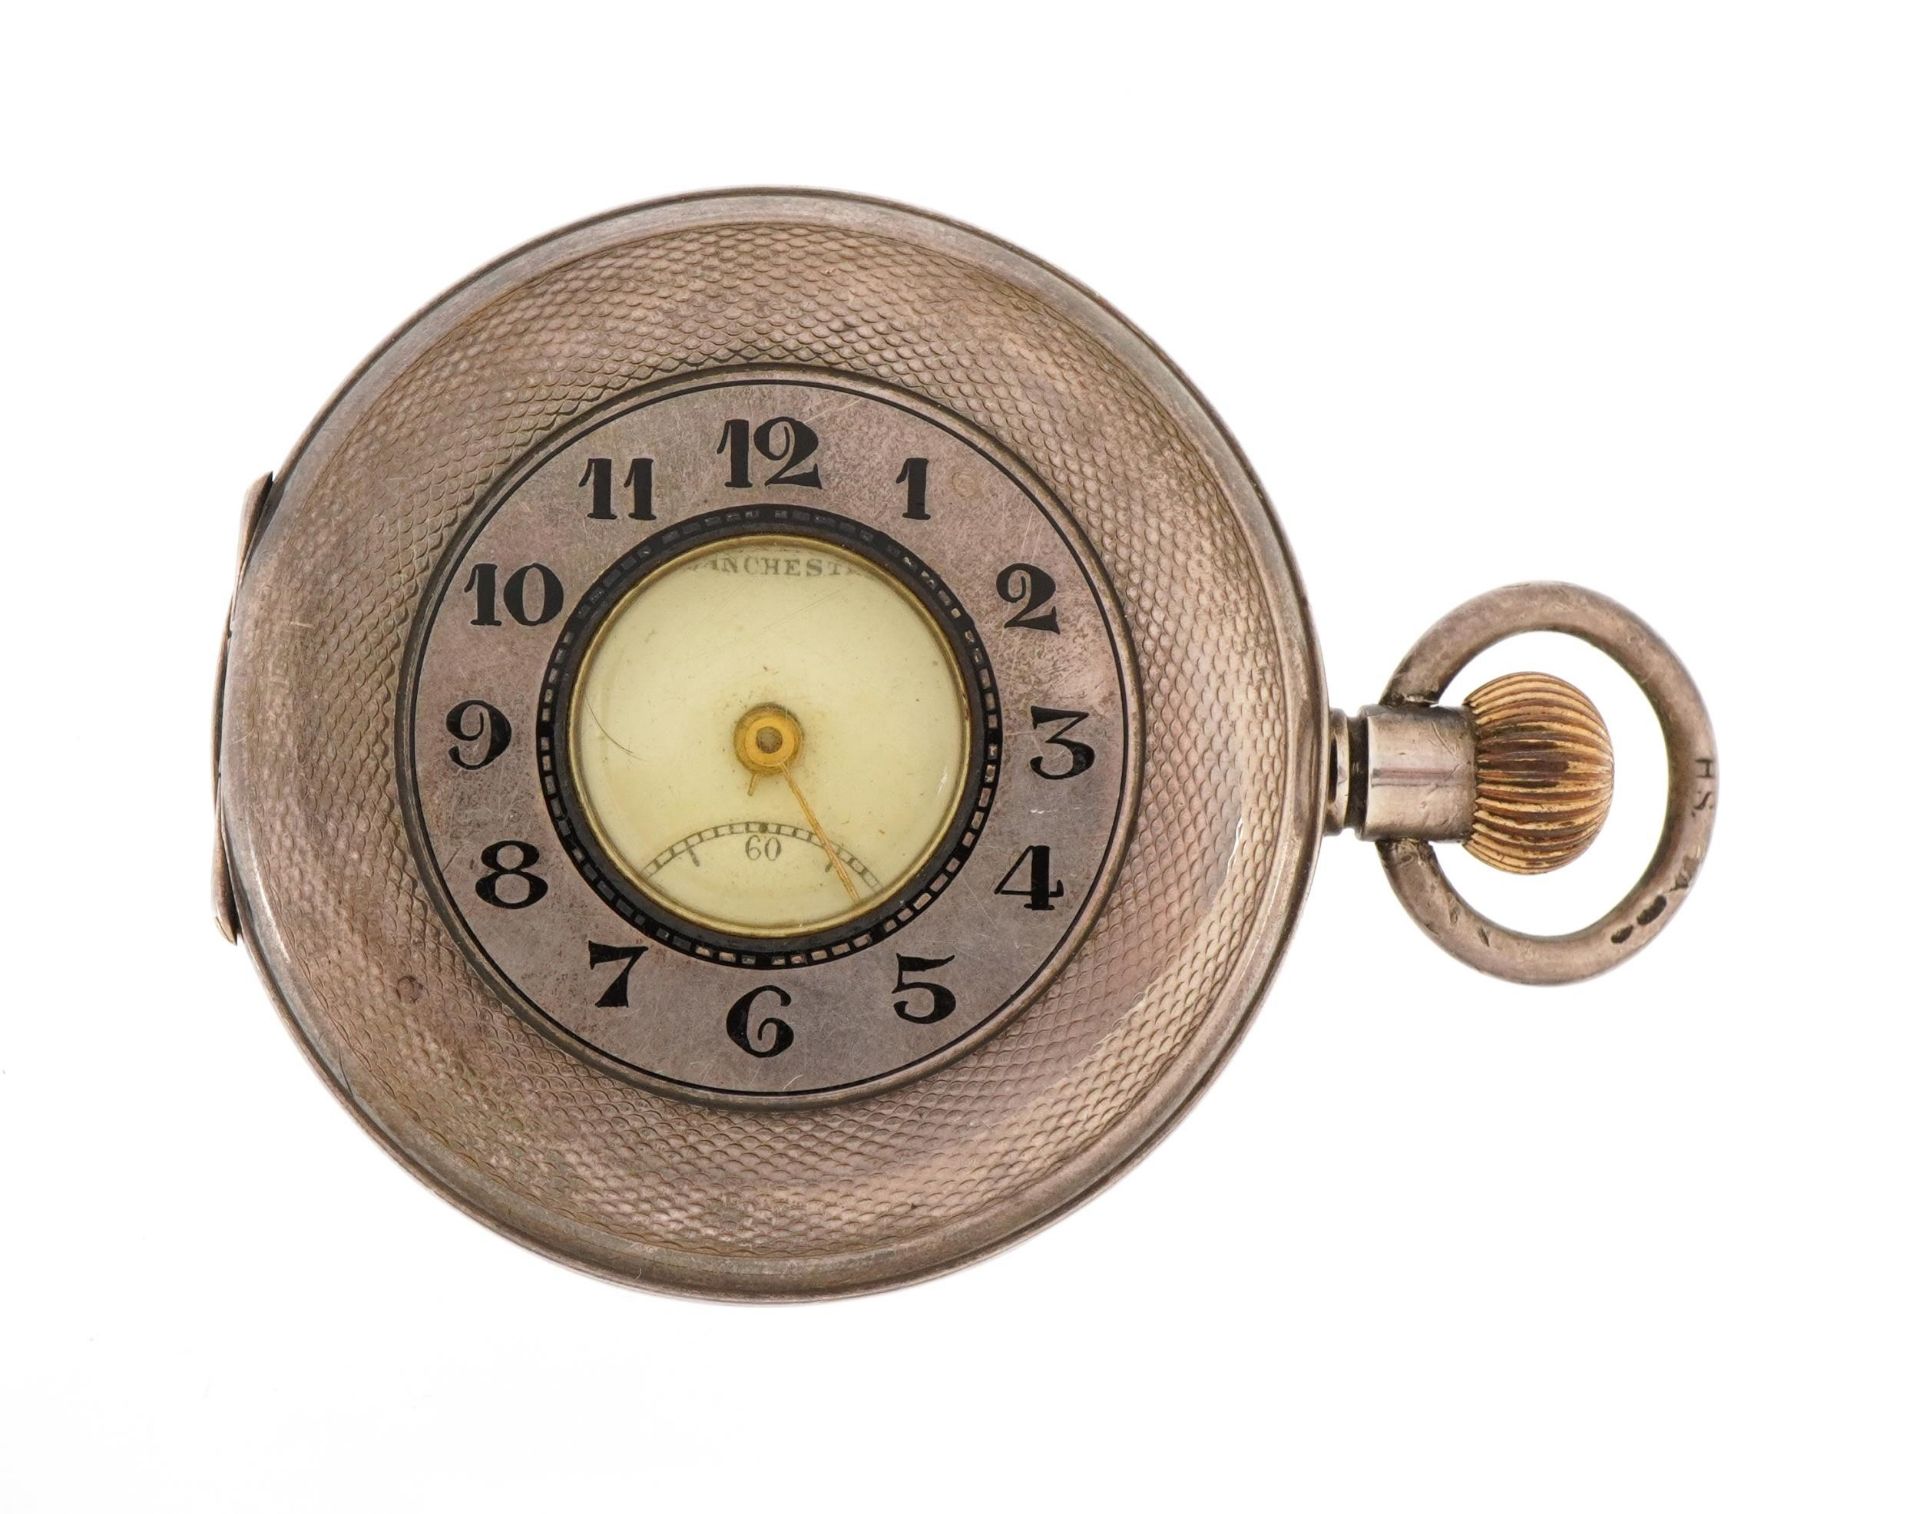 H Samuel, gentlemen's silver half hunter pocket watch, the case numbered 569654, London import